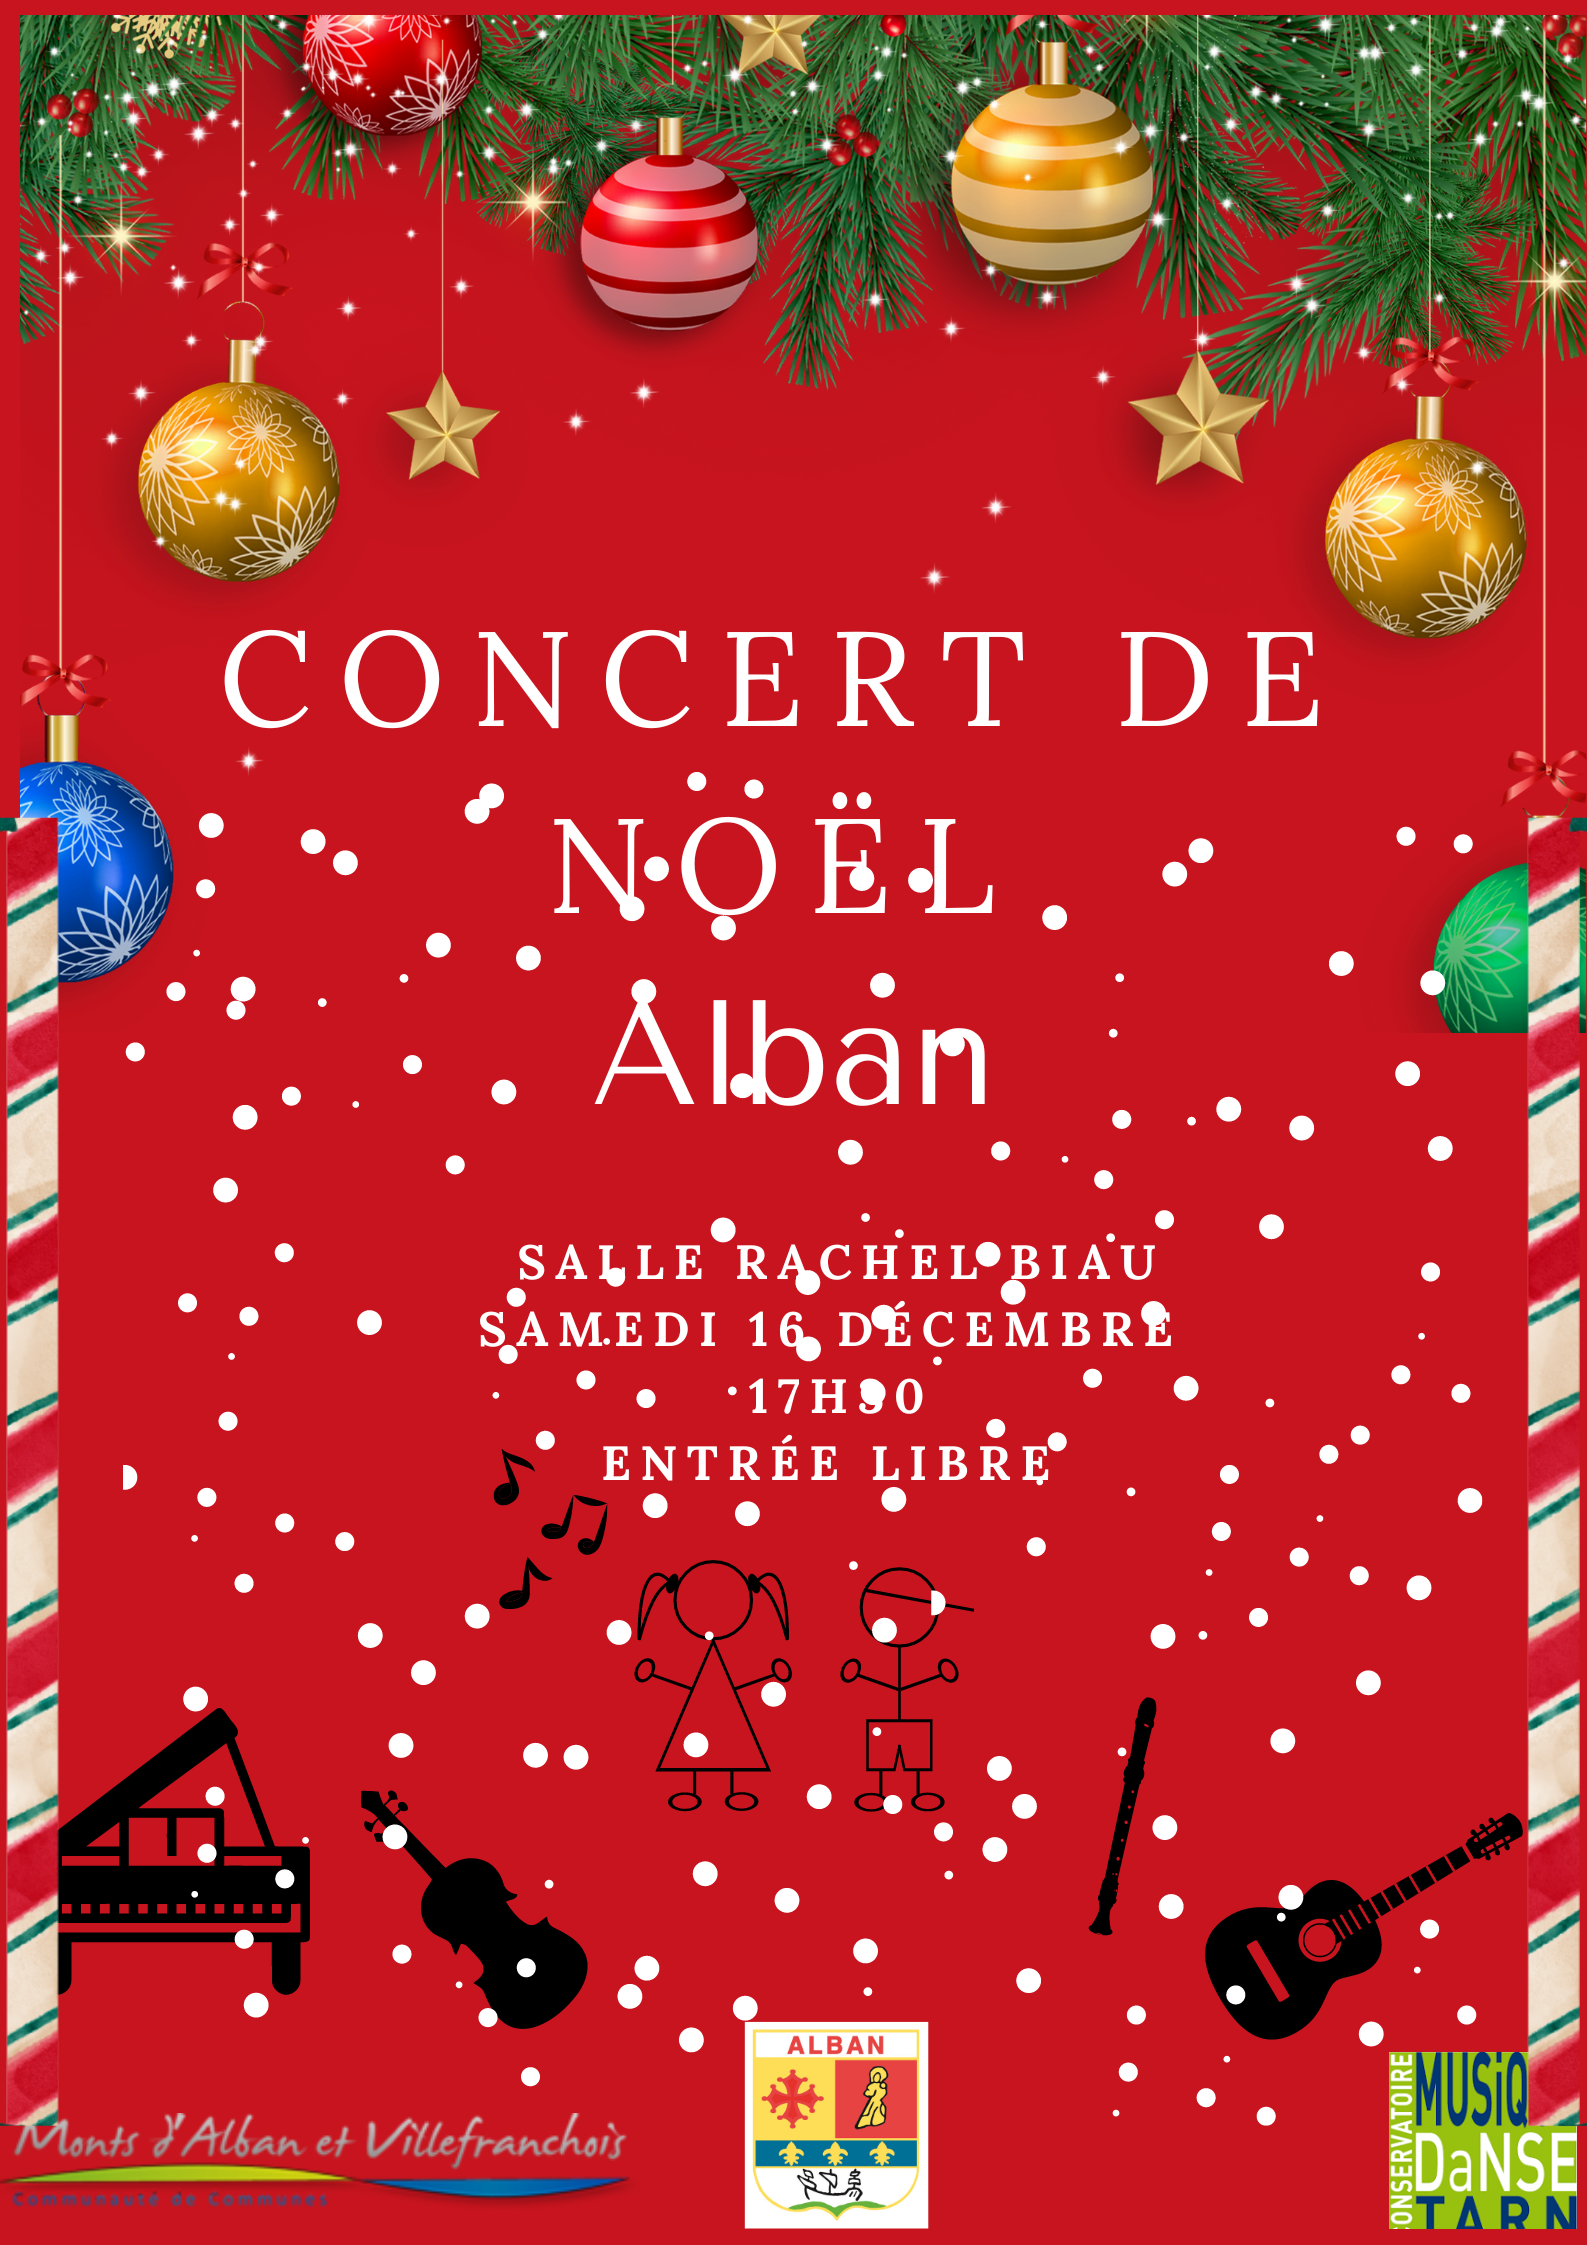 Concert de Noël, à Alban